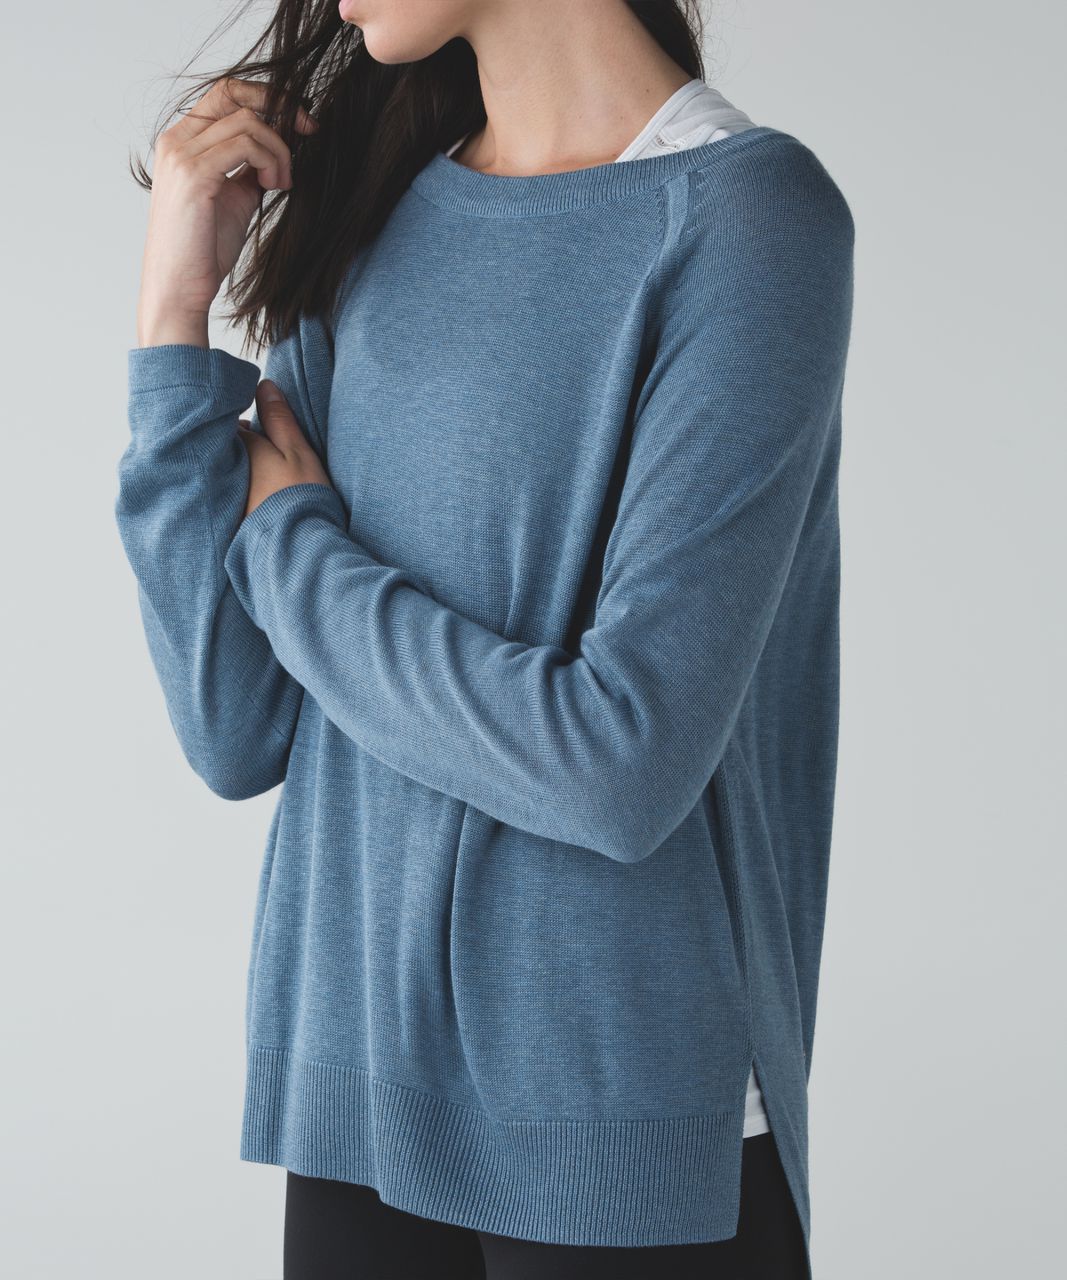 lululemon blue sweater, OFF 79%,Cheap 